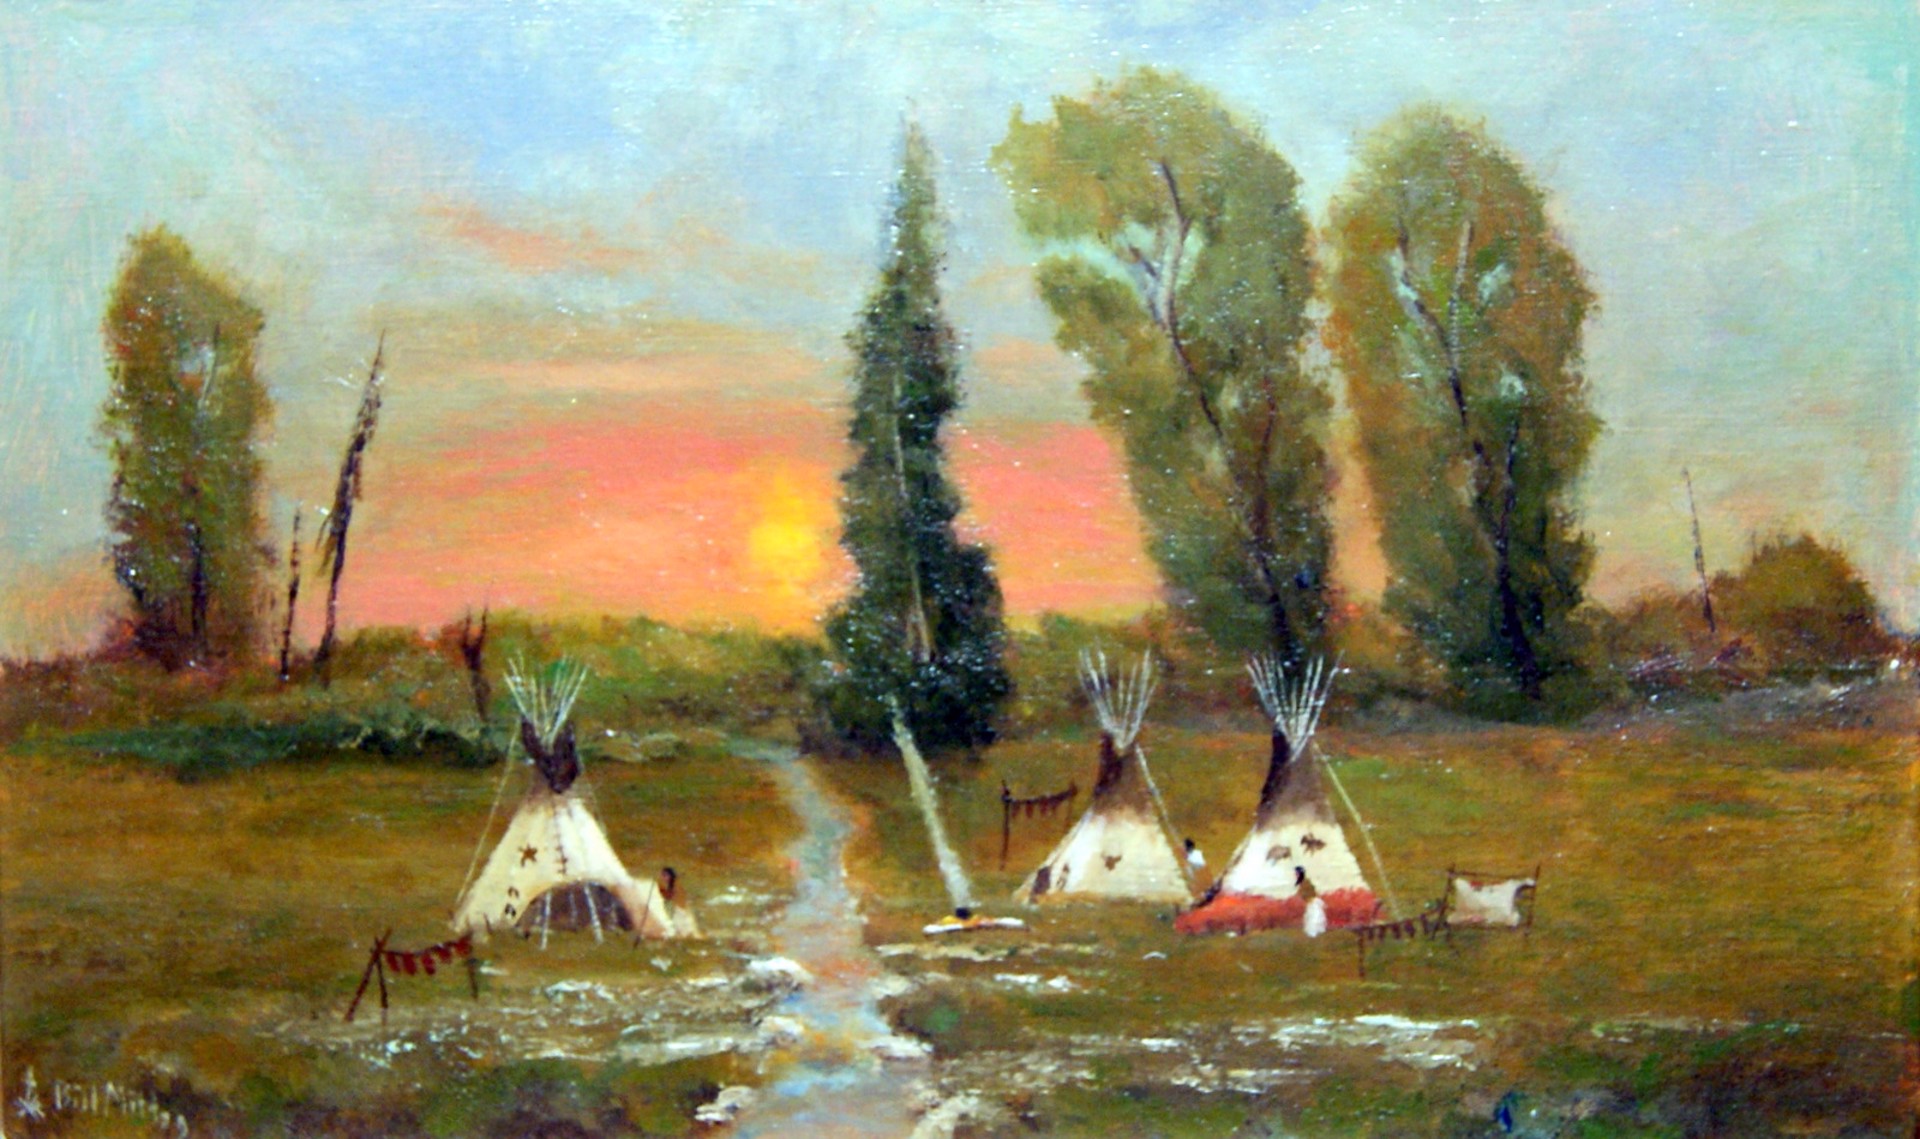 Morning of Lakota by Bill Mittag